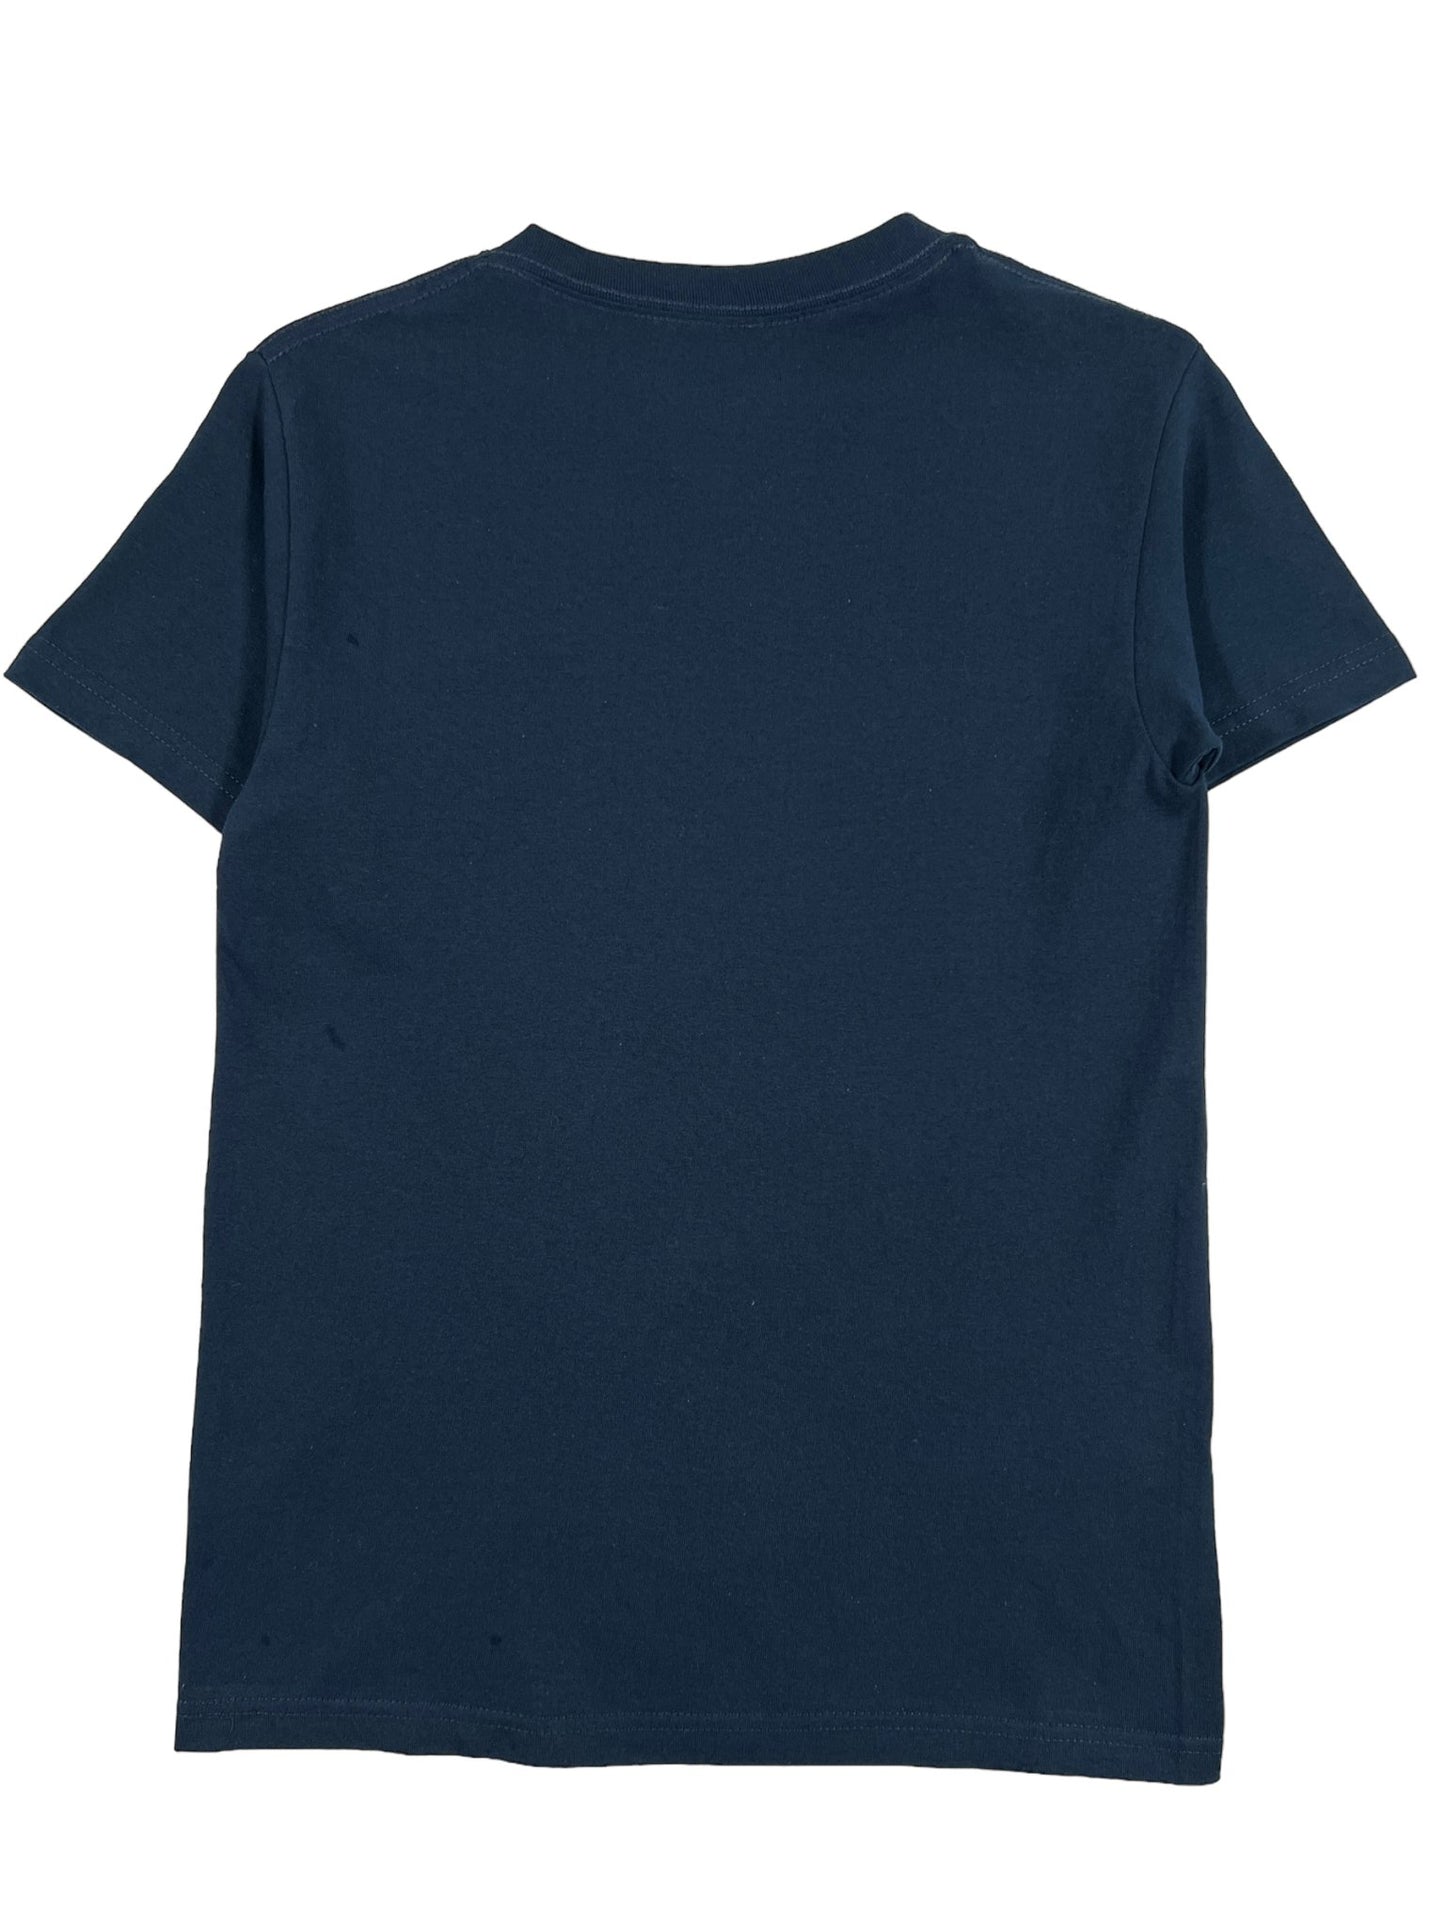 A boy's navy blue PLEASURES CRASH graphic t-shirt on a white background.